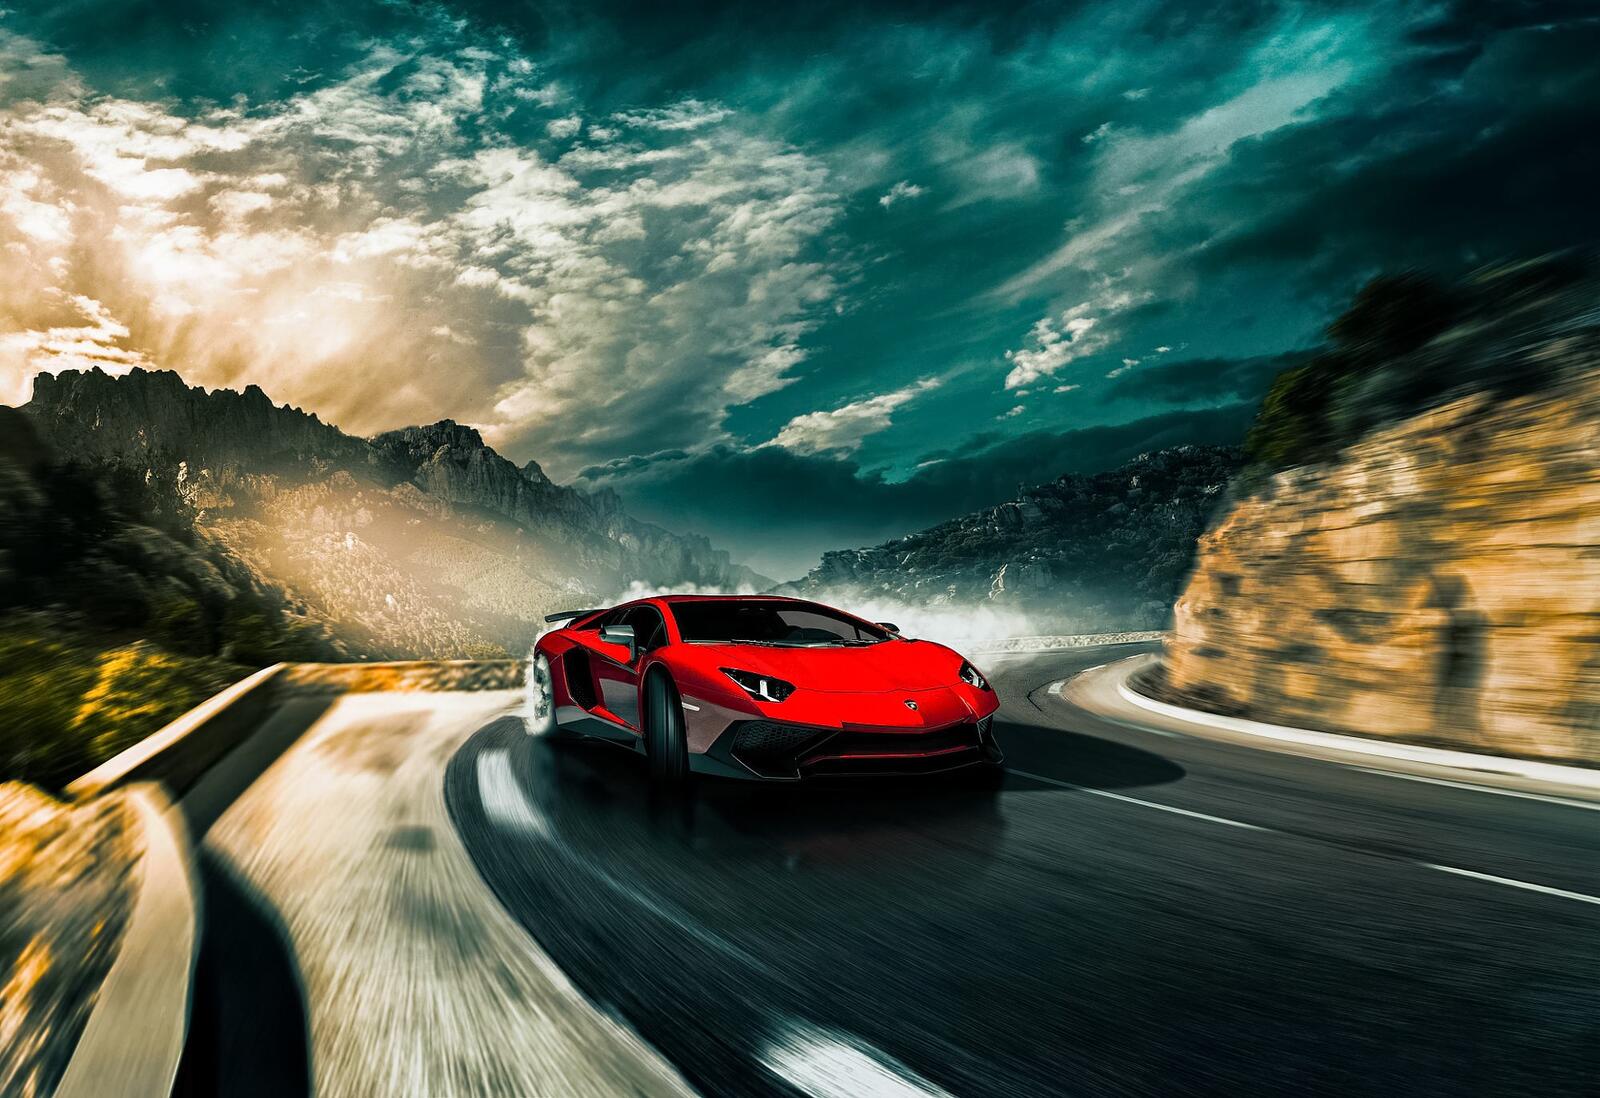 Free photo A red Lamborghini Aventador on a country road.